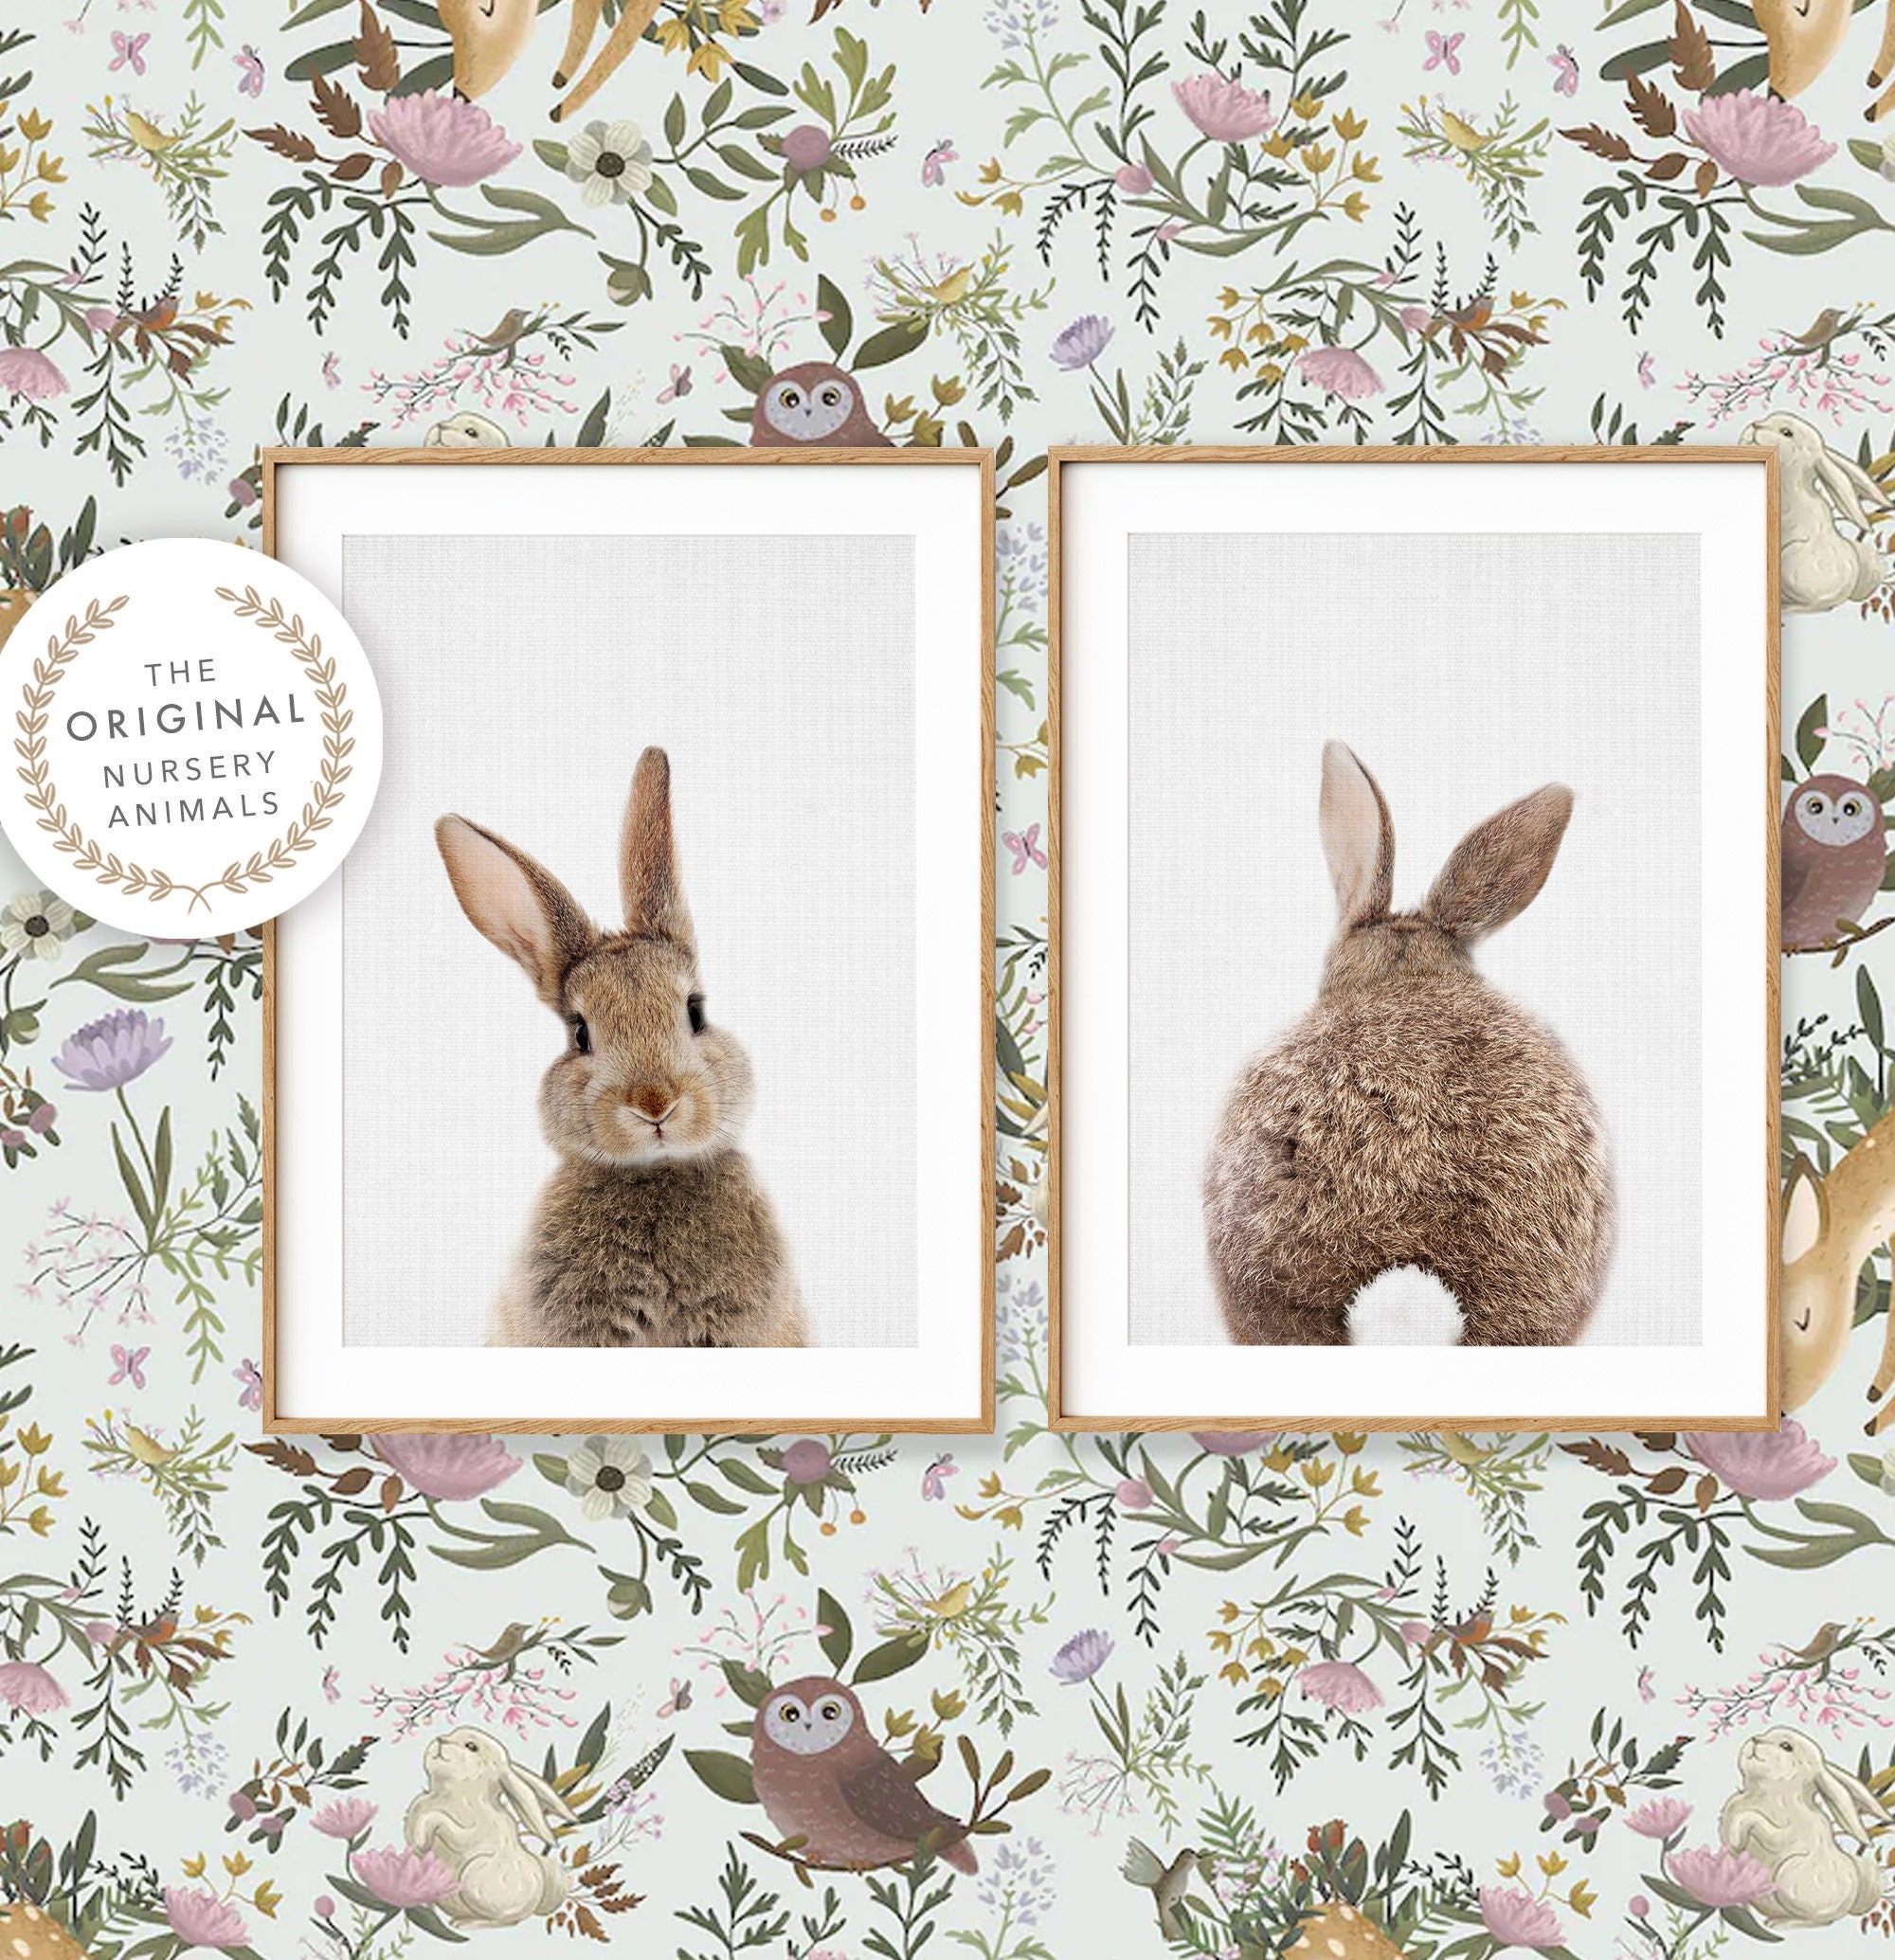 Rabbit Family Nursery Art Print with Bluebird and Baby Rabbit